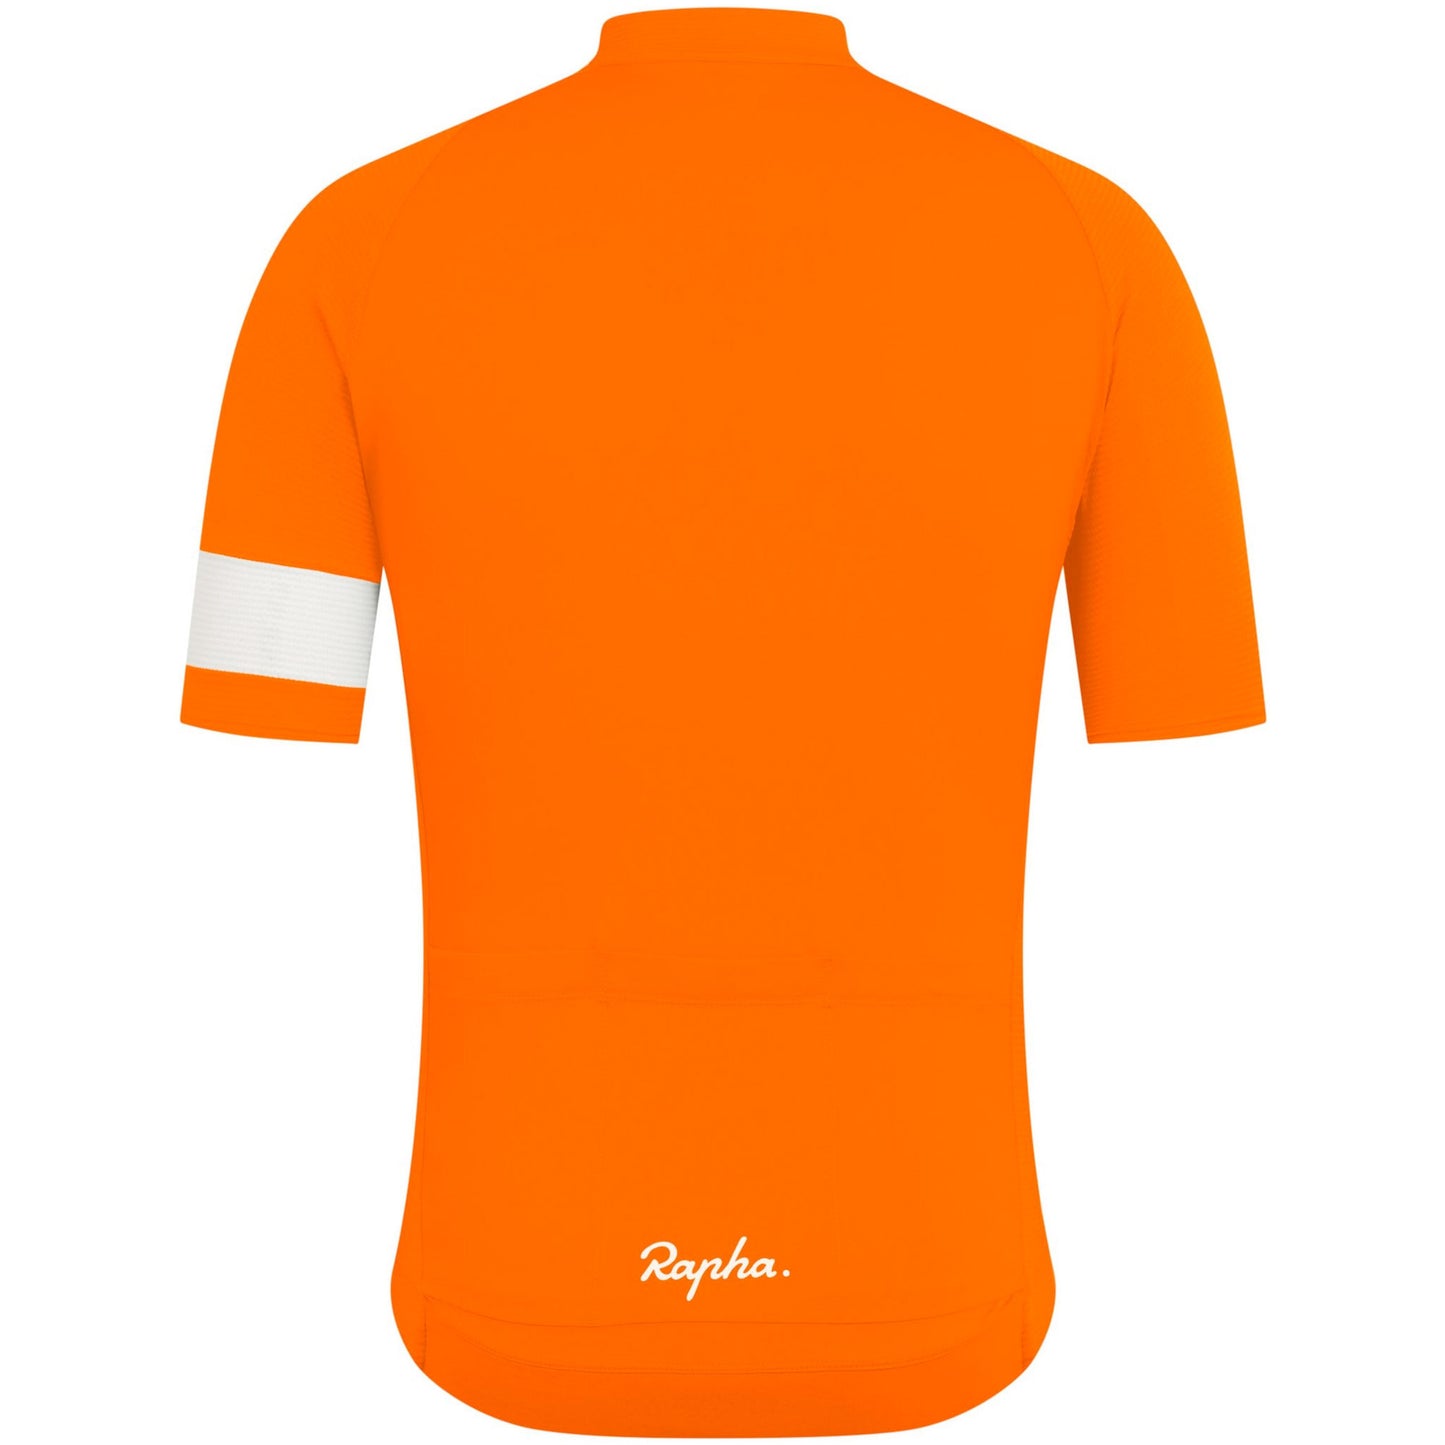 Rapha Men's Core Lightweight Jersey - Orange